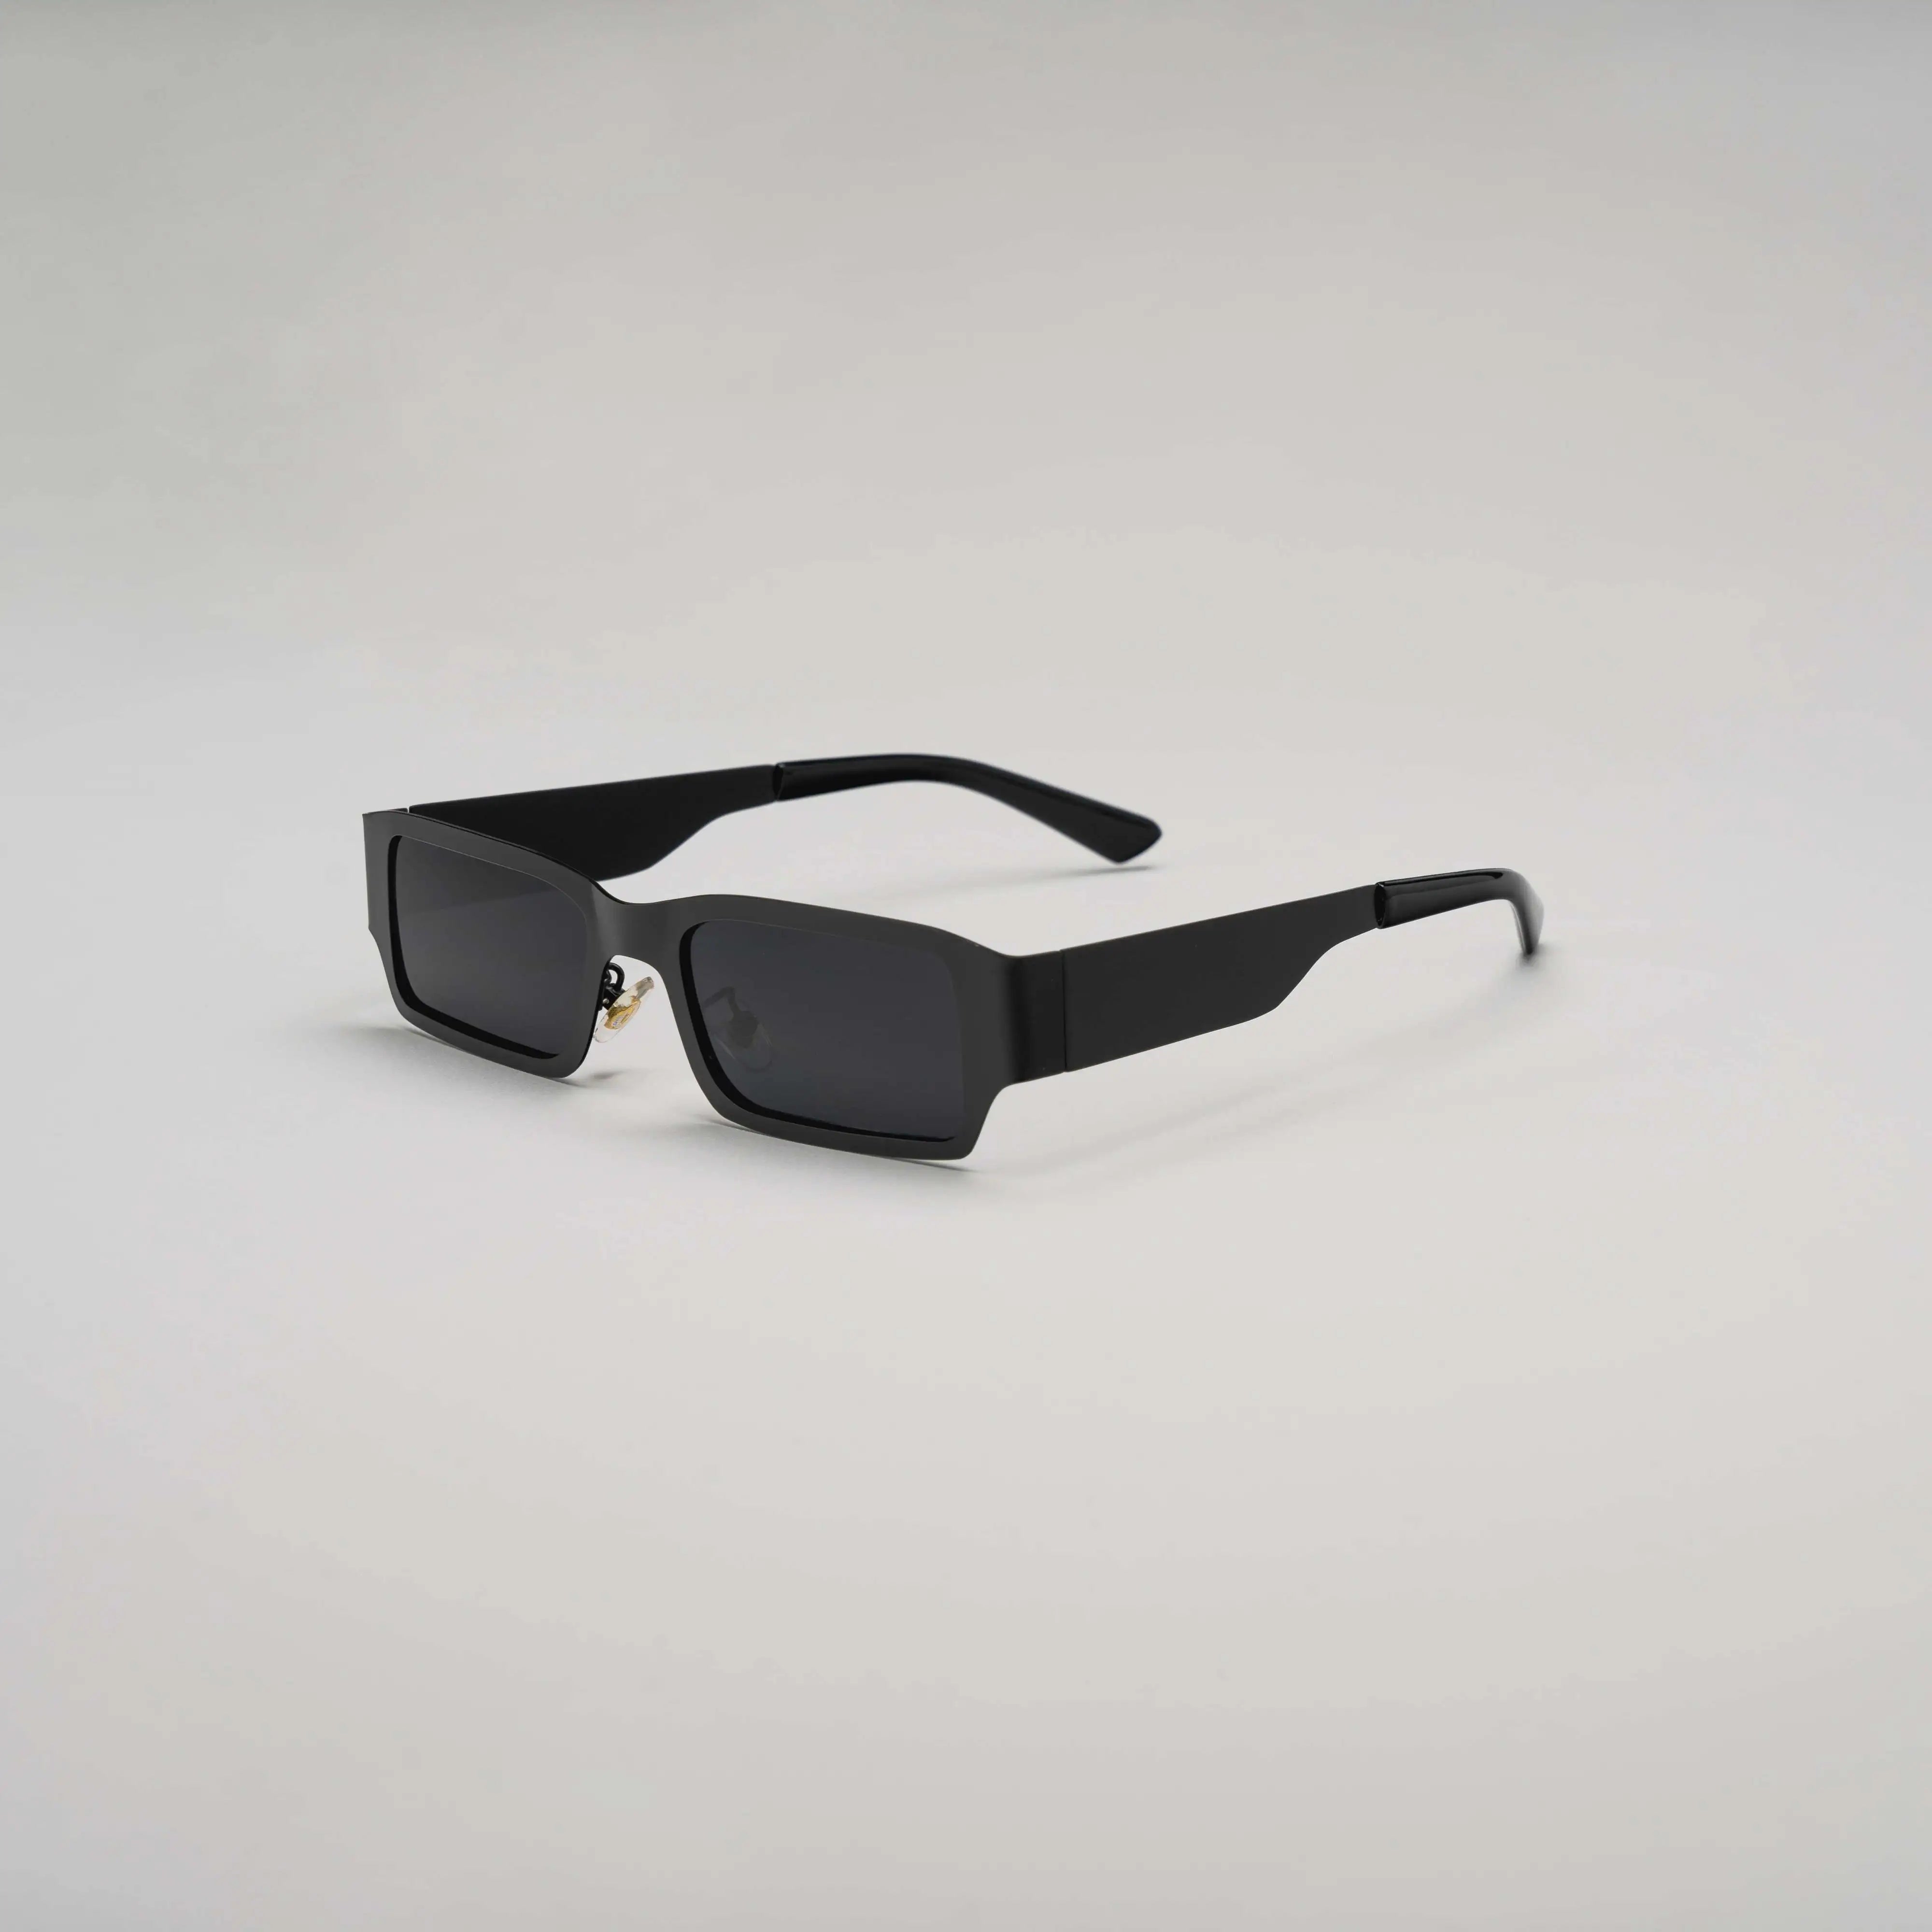 'Hyperspace' Retro Sunglasses in Metallic Black